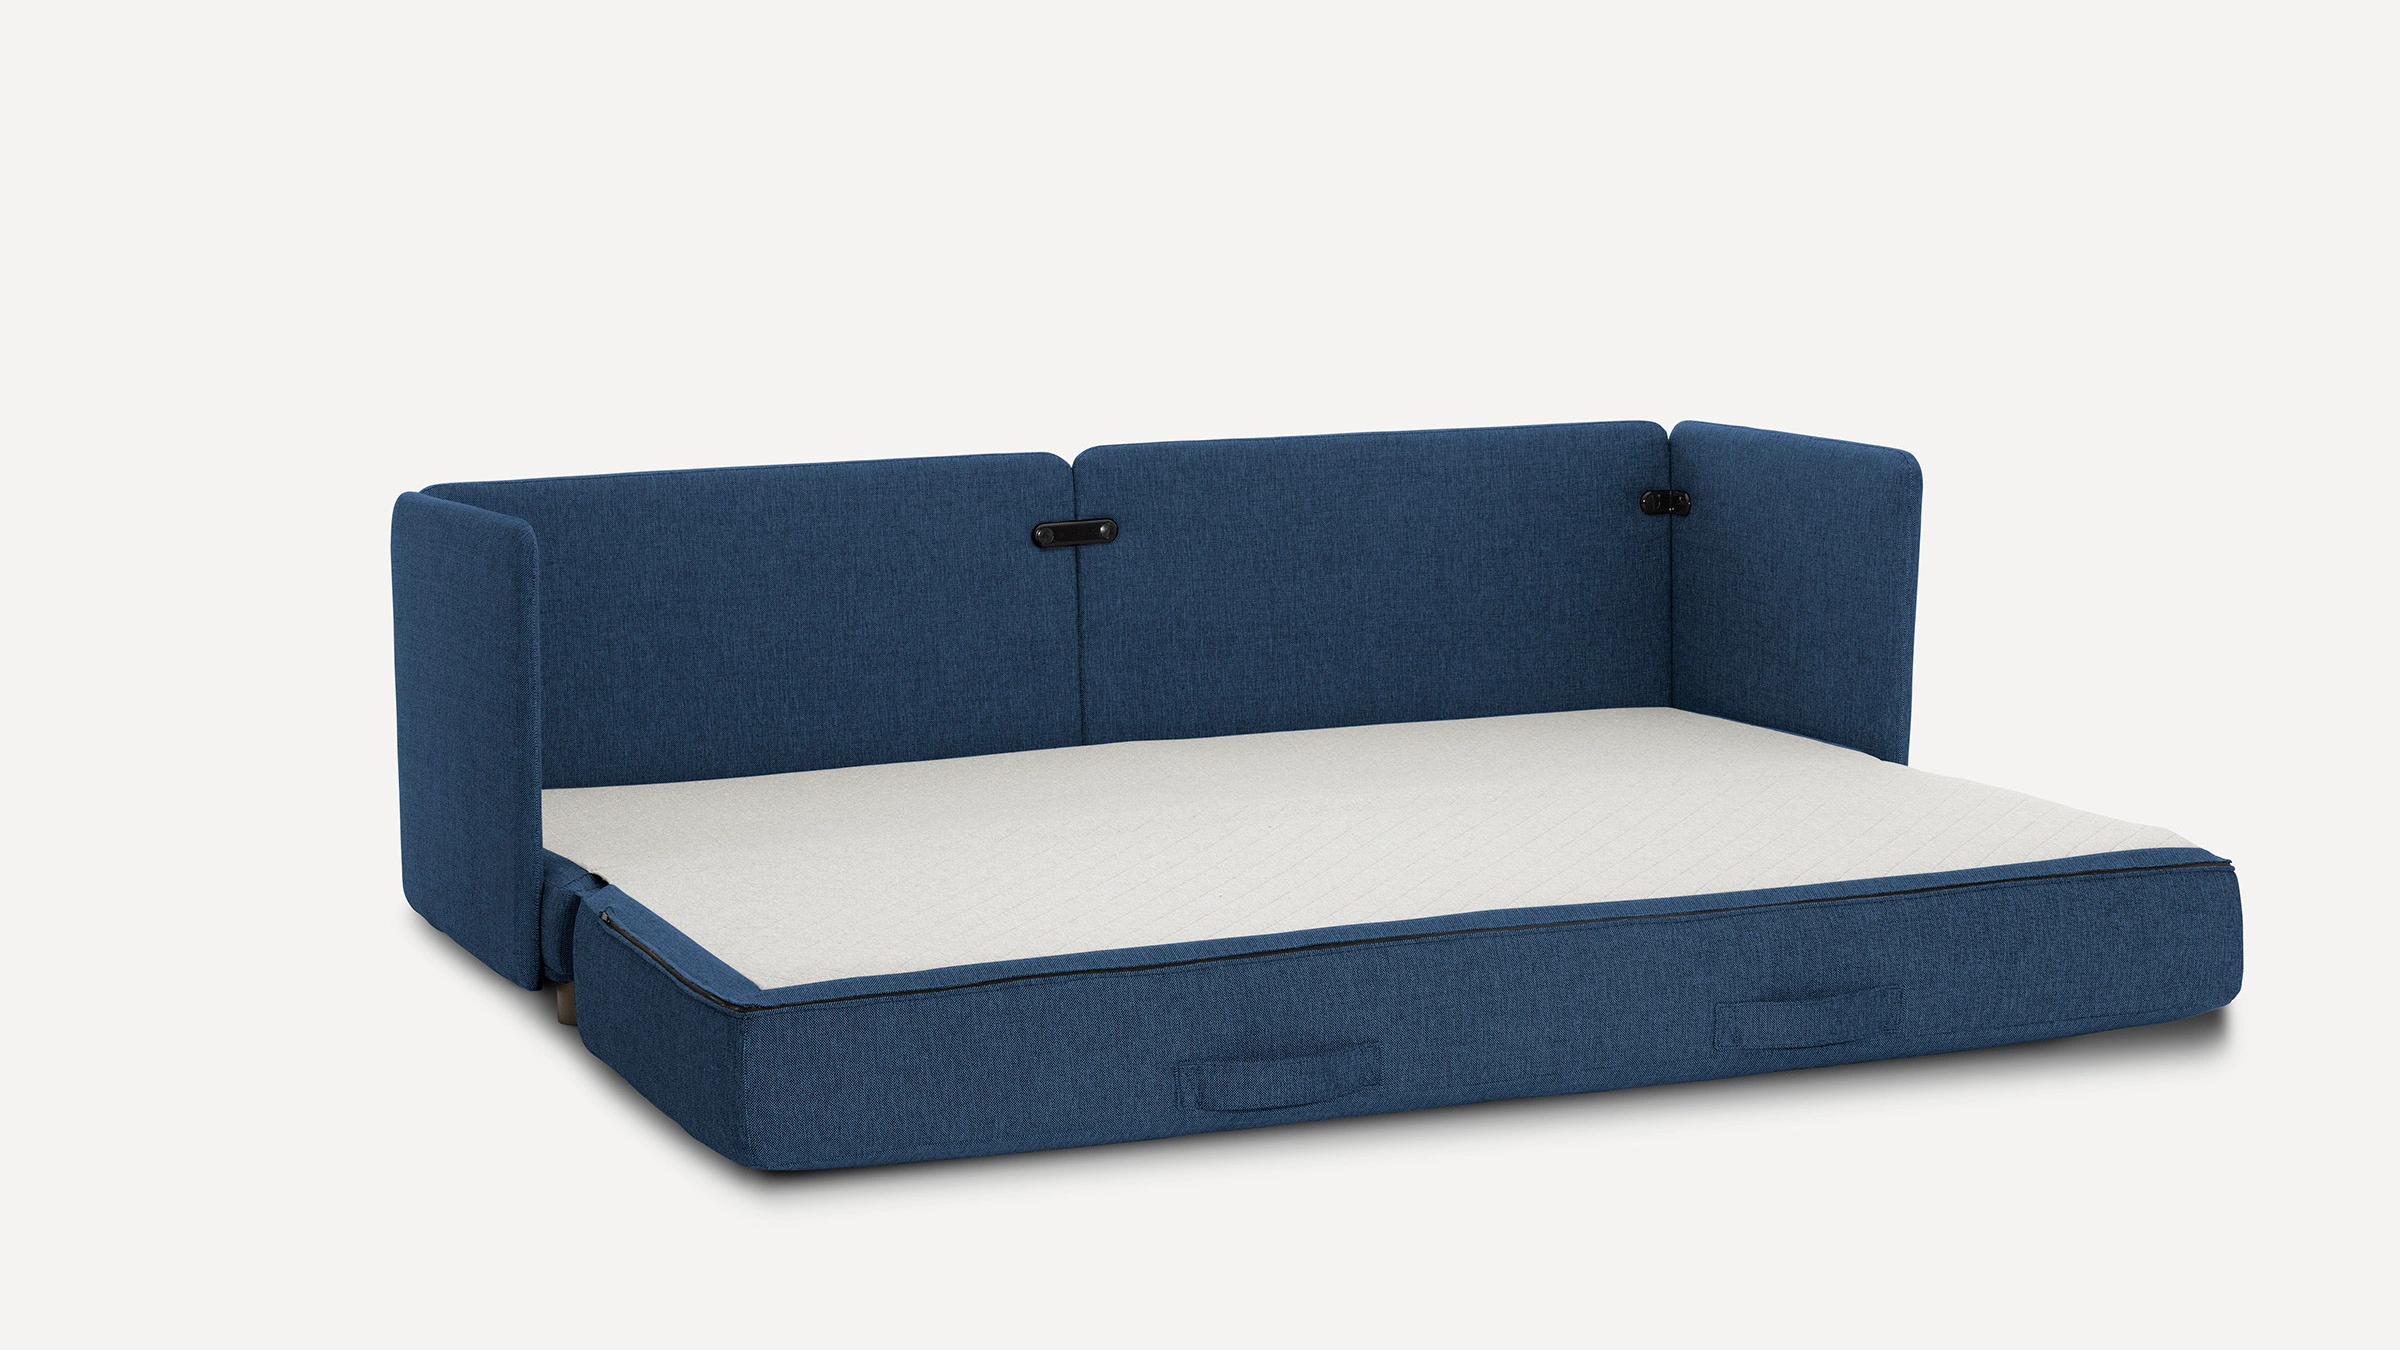 Burrow Shift Sleeper Sofa review: The best sleeper sofa we've ever tried